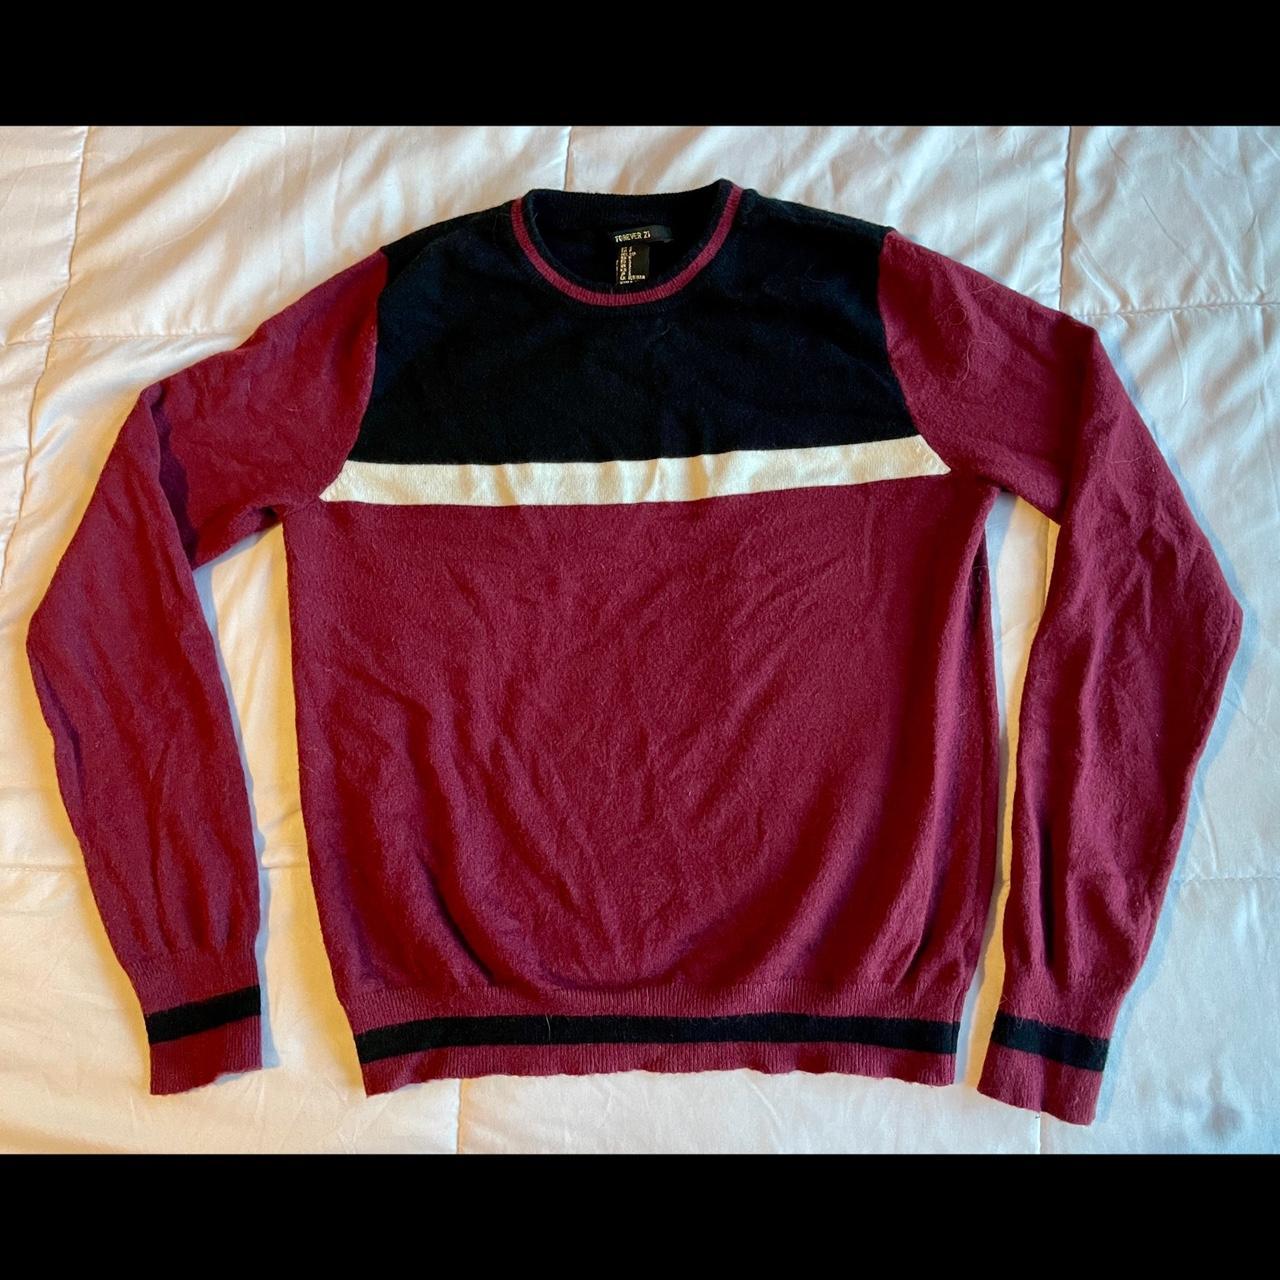 90s style colorblock striped sweater in maroon,... - Depop